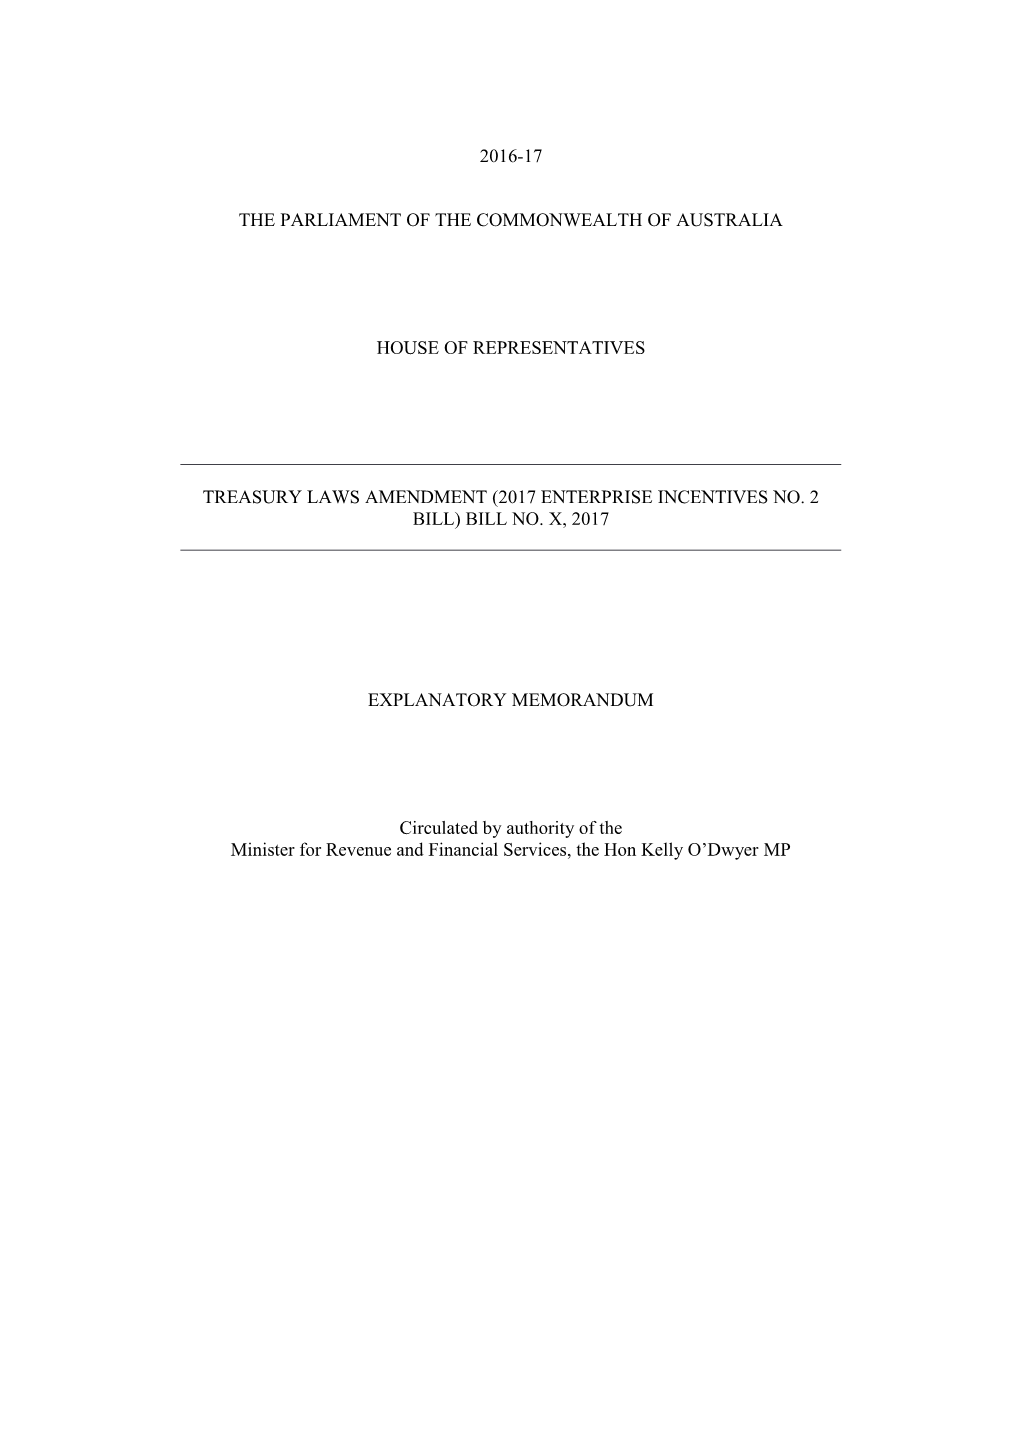 Explanatory Memorandum - National Innovation and Science Agenda - Improving Corporate Insolvency